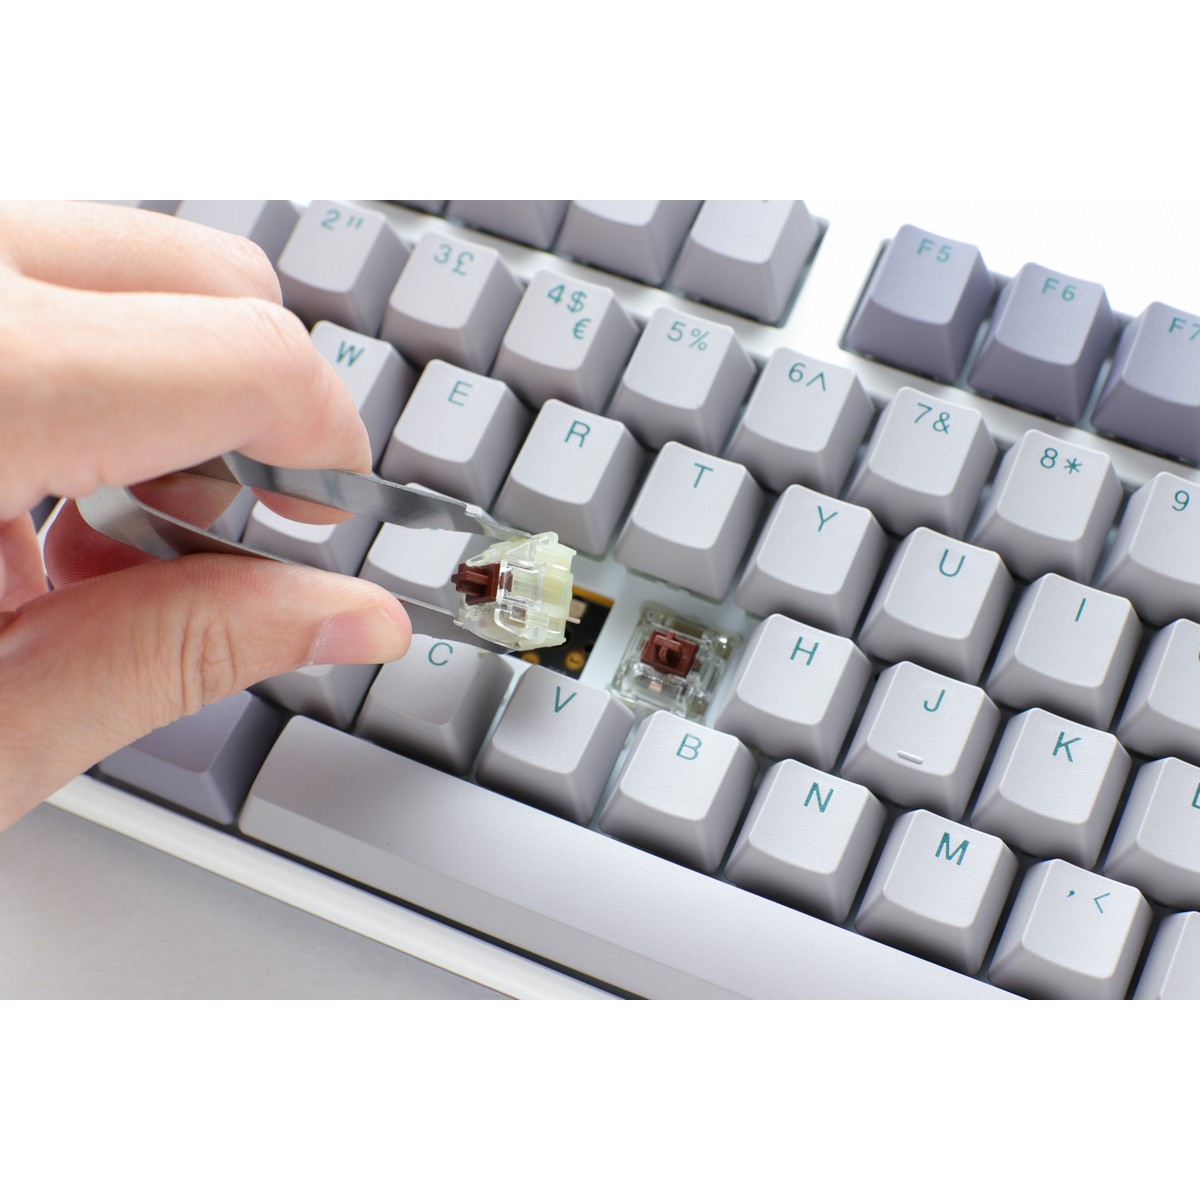 Ducky - Ducky One 3 Mist TKL 80% USB RGB Mechanical Gaming Keyboard Cherry MX Blue Switch - UK Layout